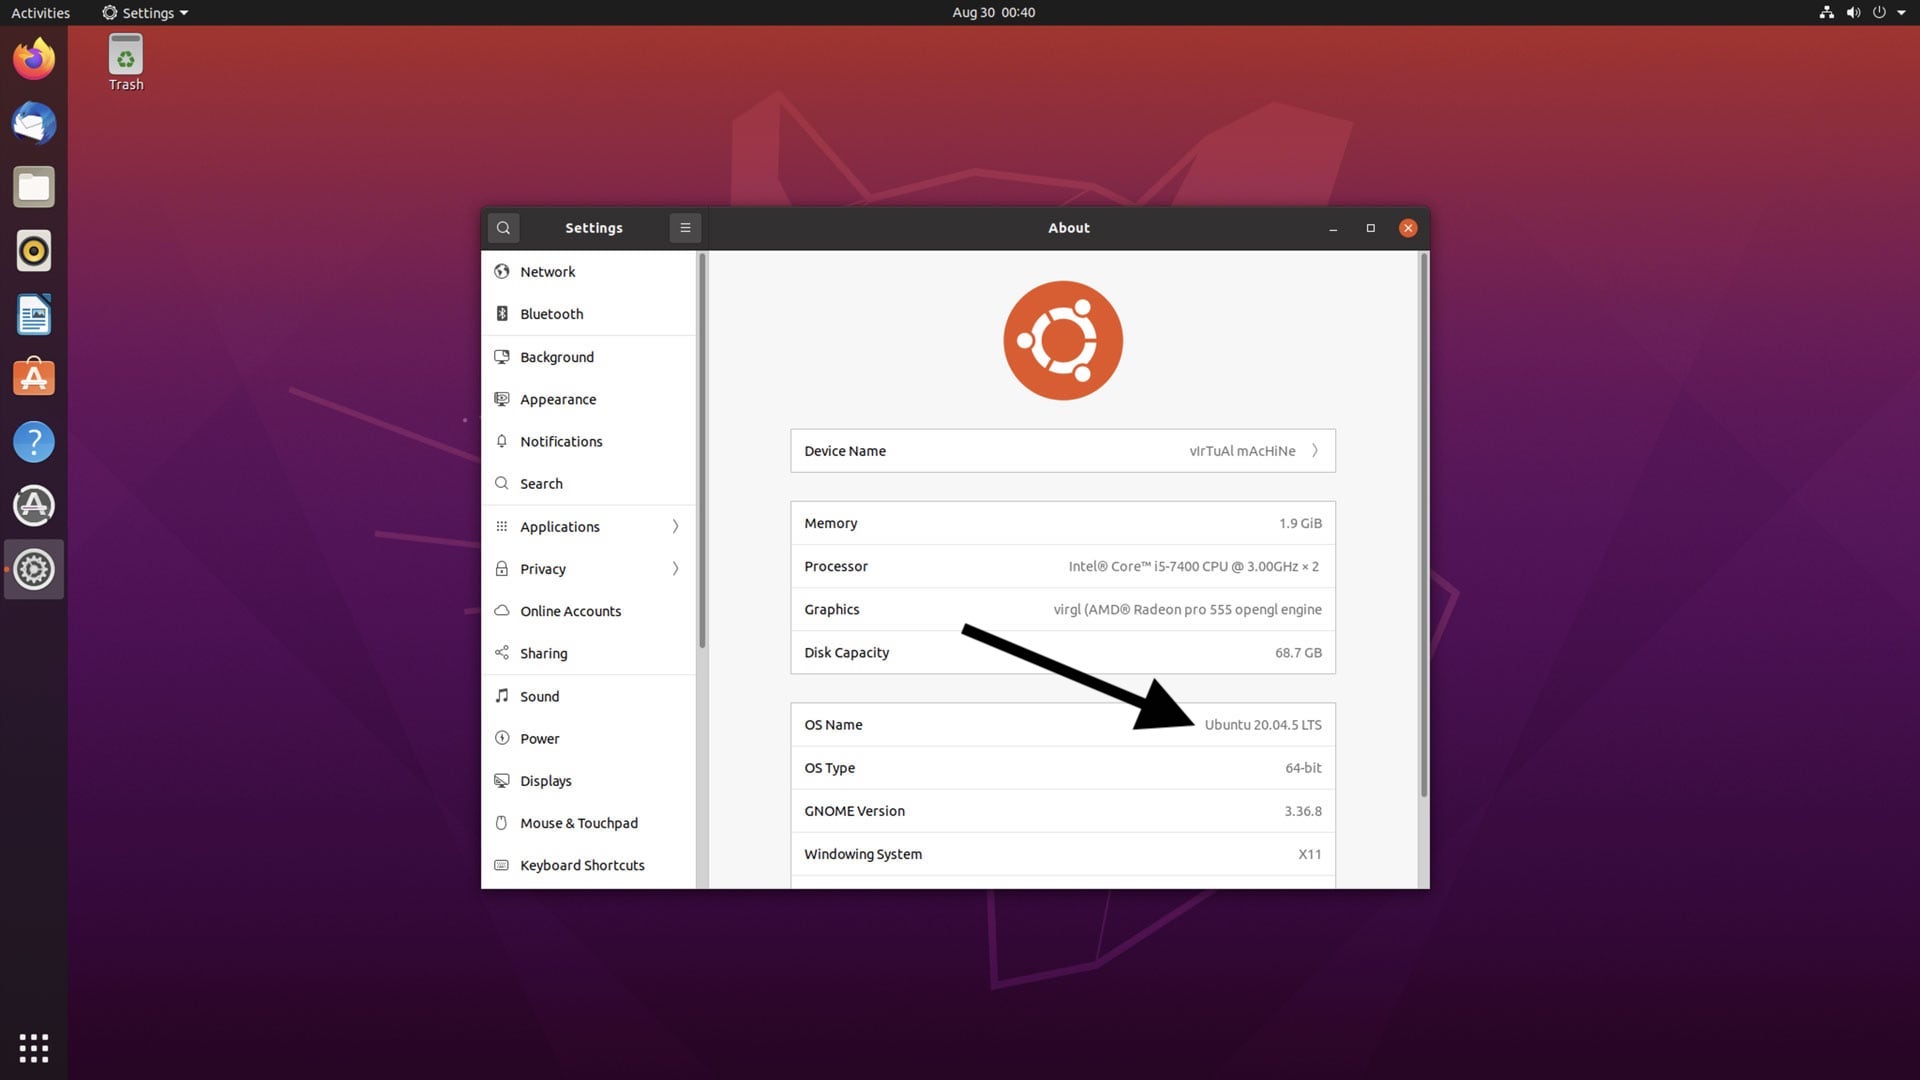 What is the kernel version of Ubuntu 20.04 5?